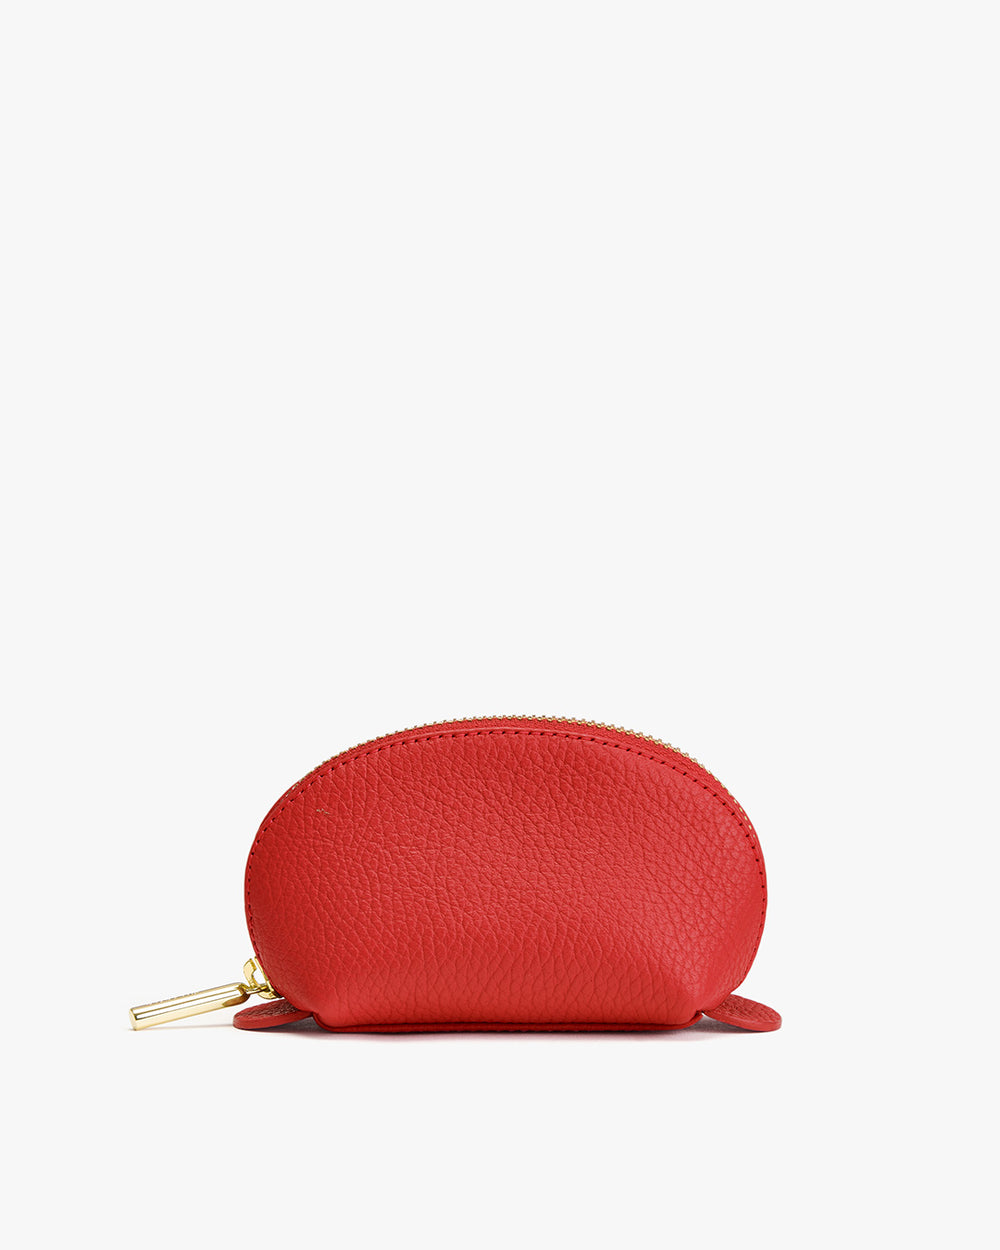 Small zipper purse on a plain background